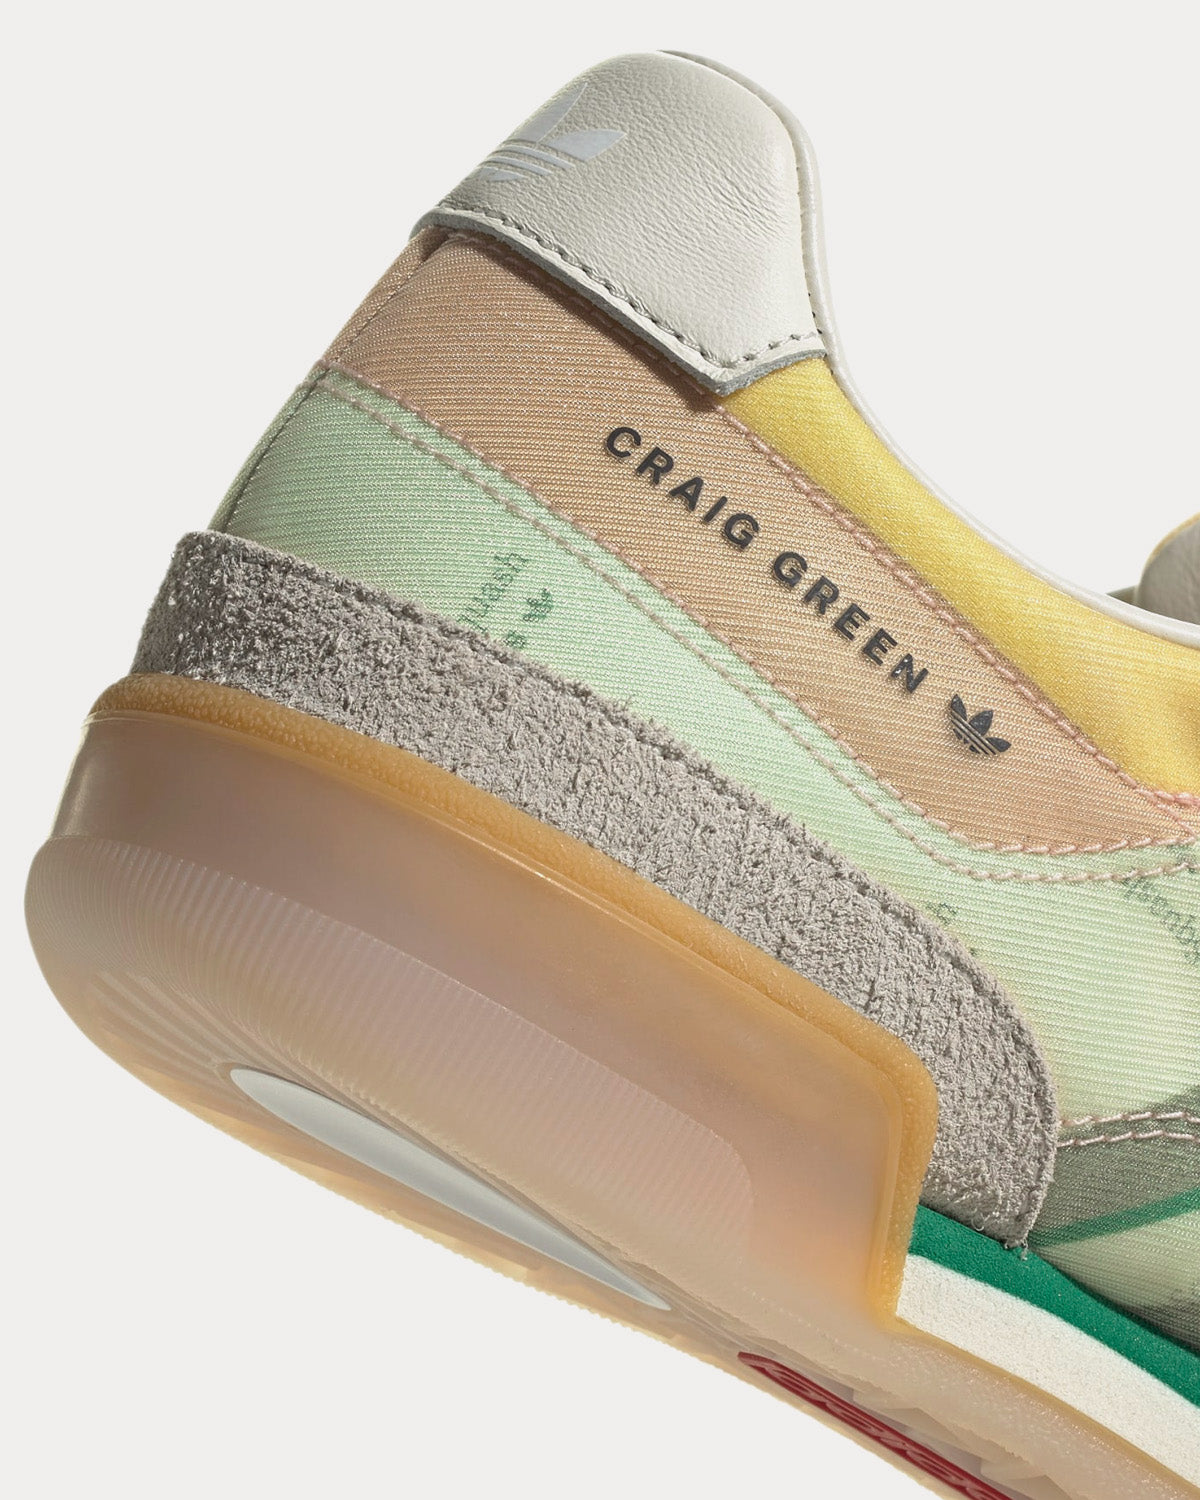 Adidas x Craig Green - Squash Polta AKH Cream White / Sesame / Bold Green Low Top Sneakers